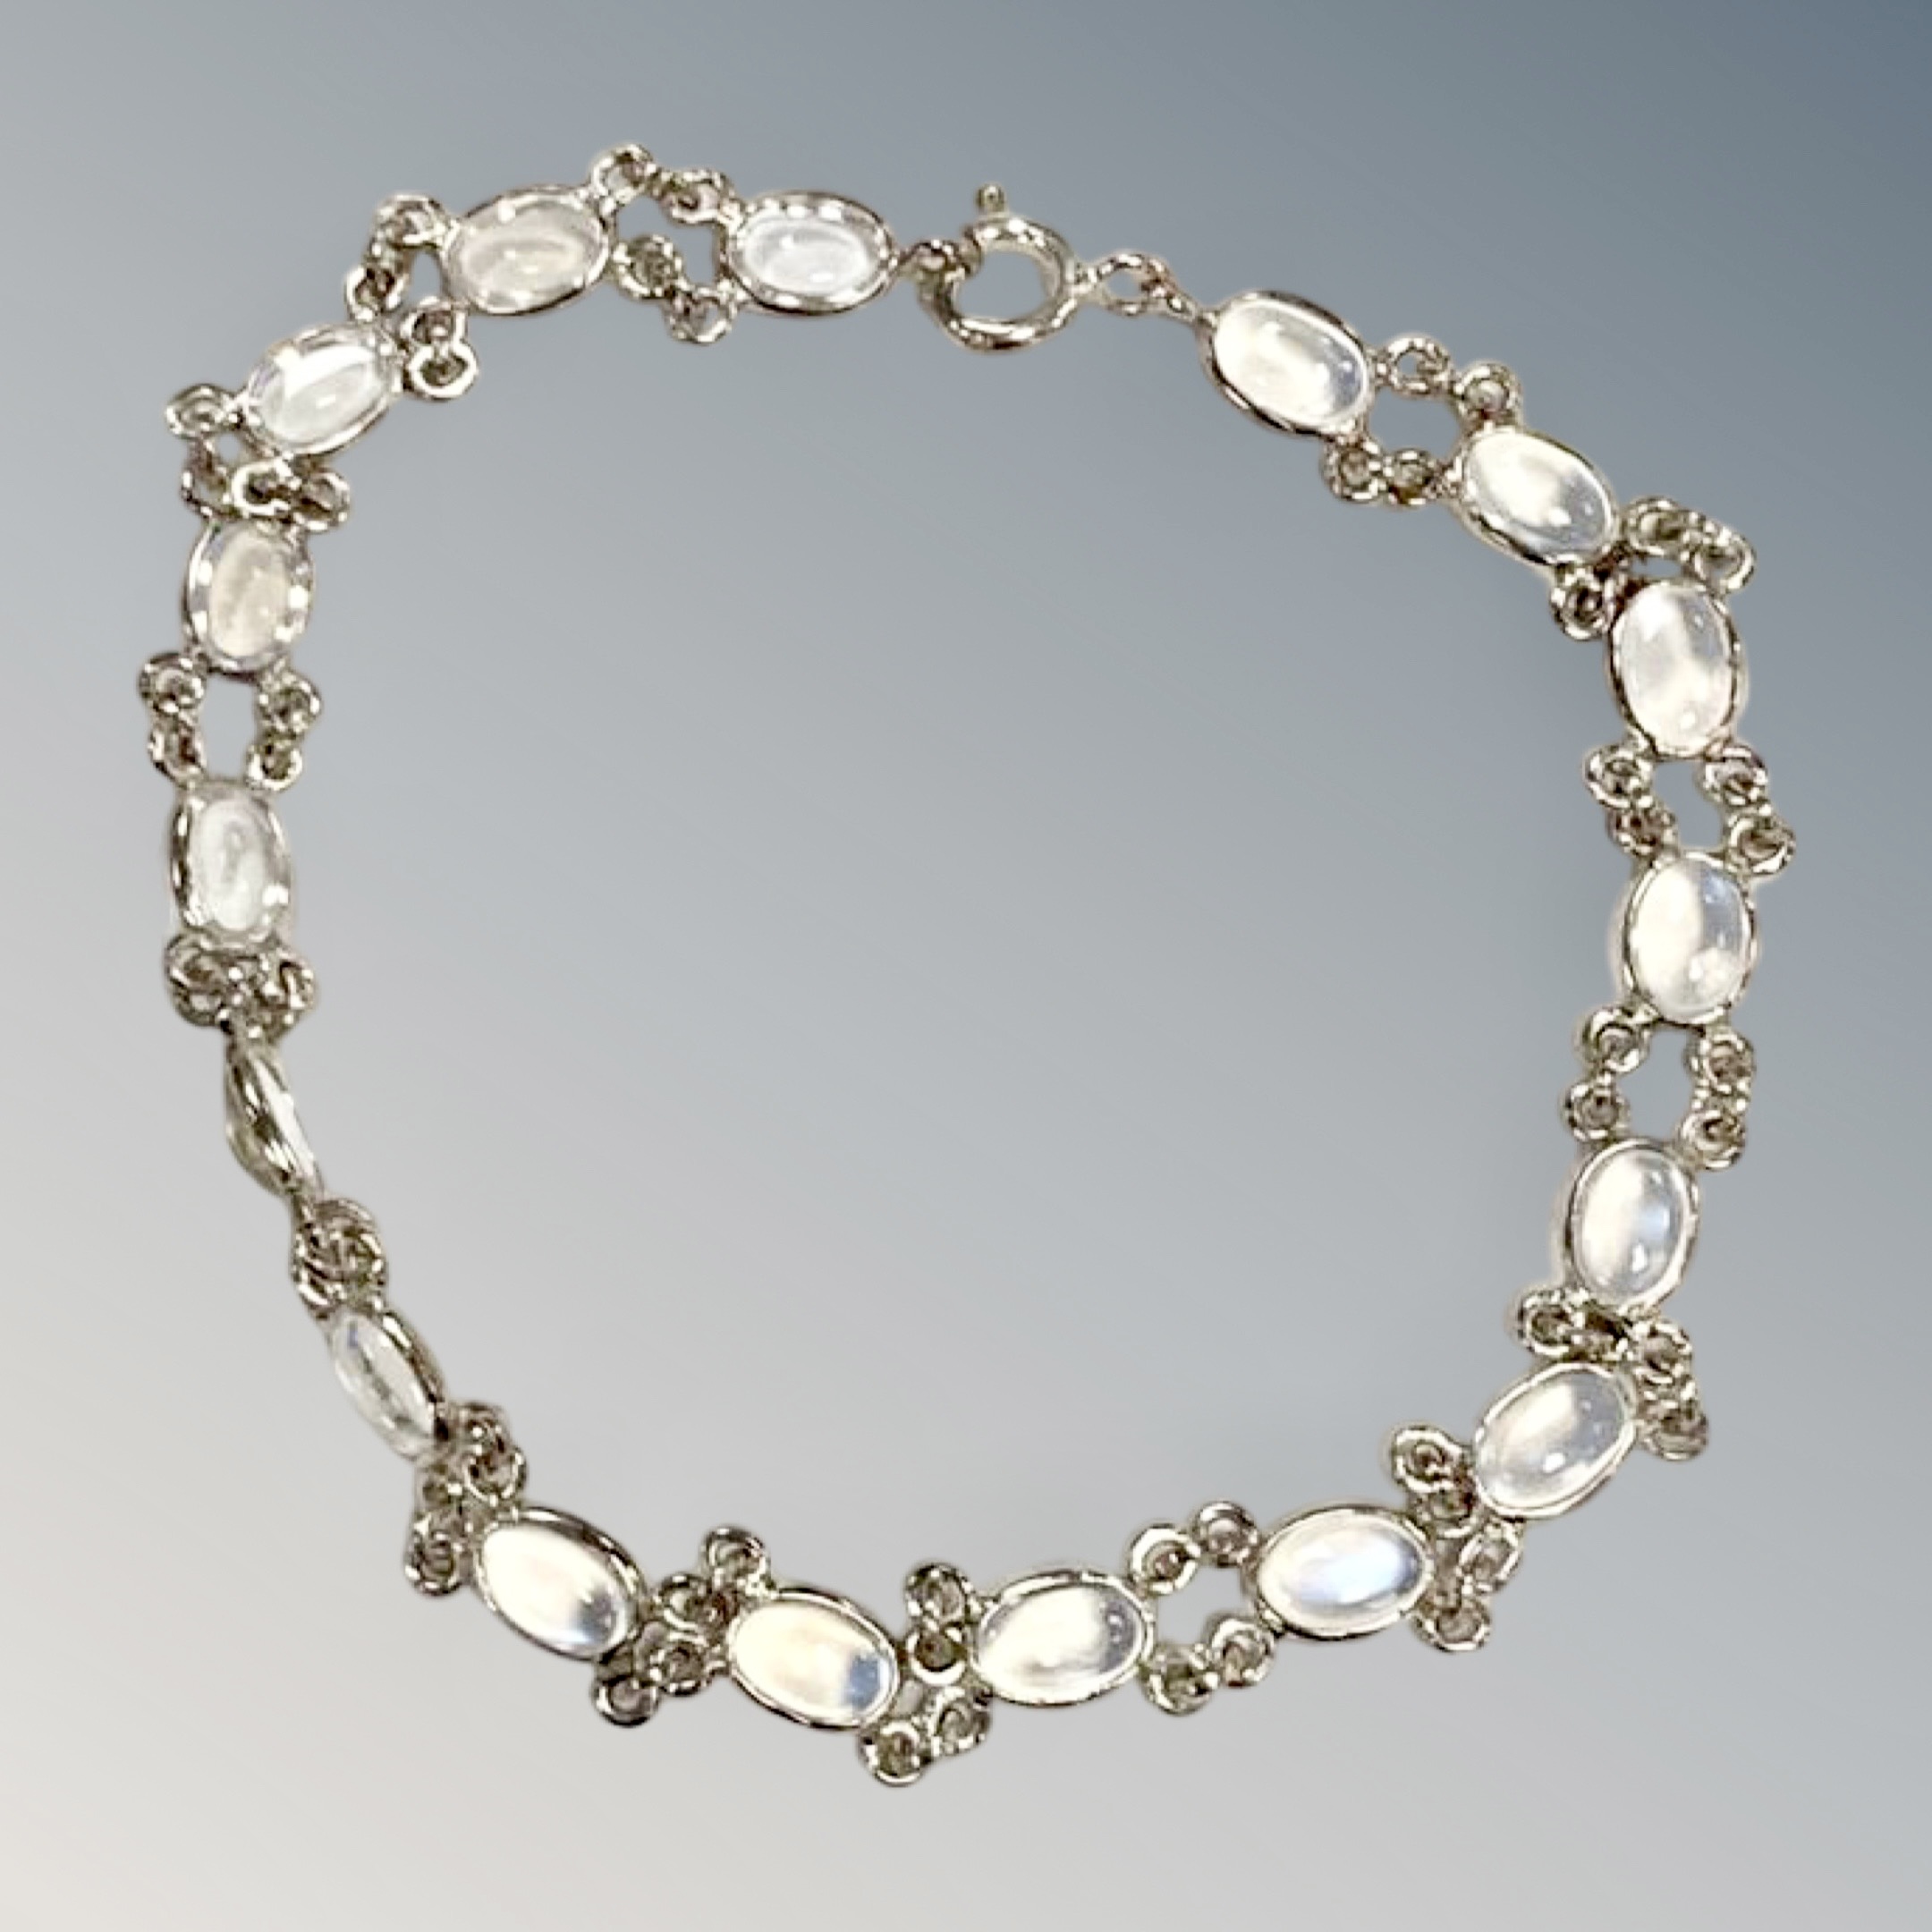 A moonstone silver bracelet